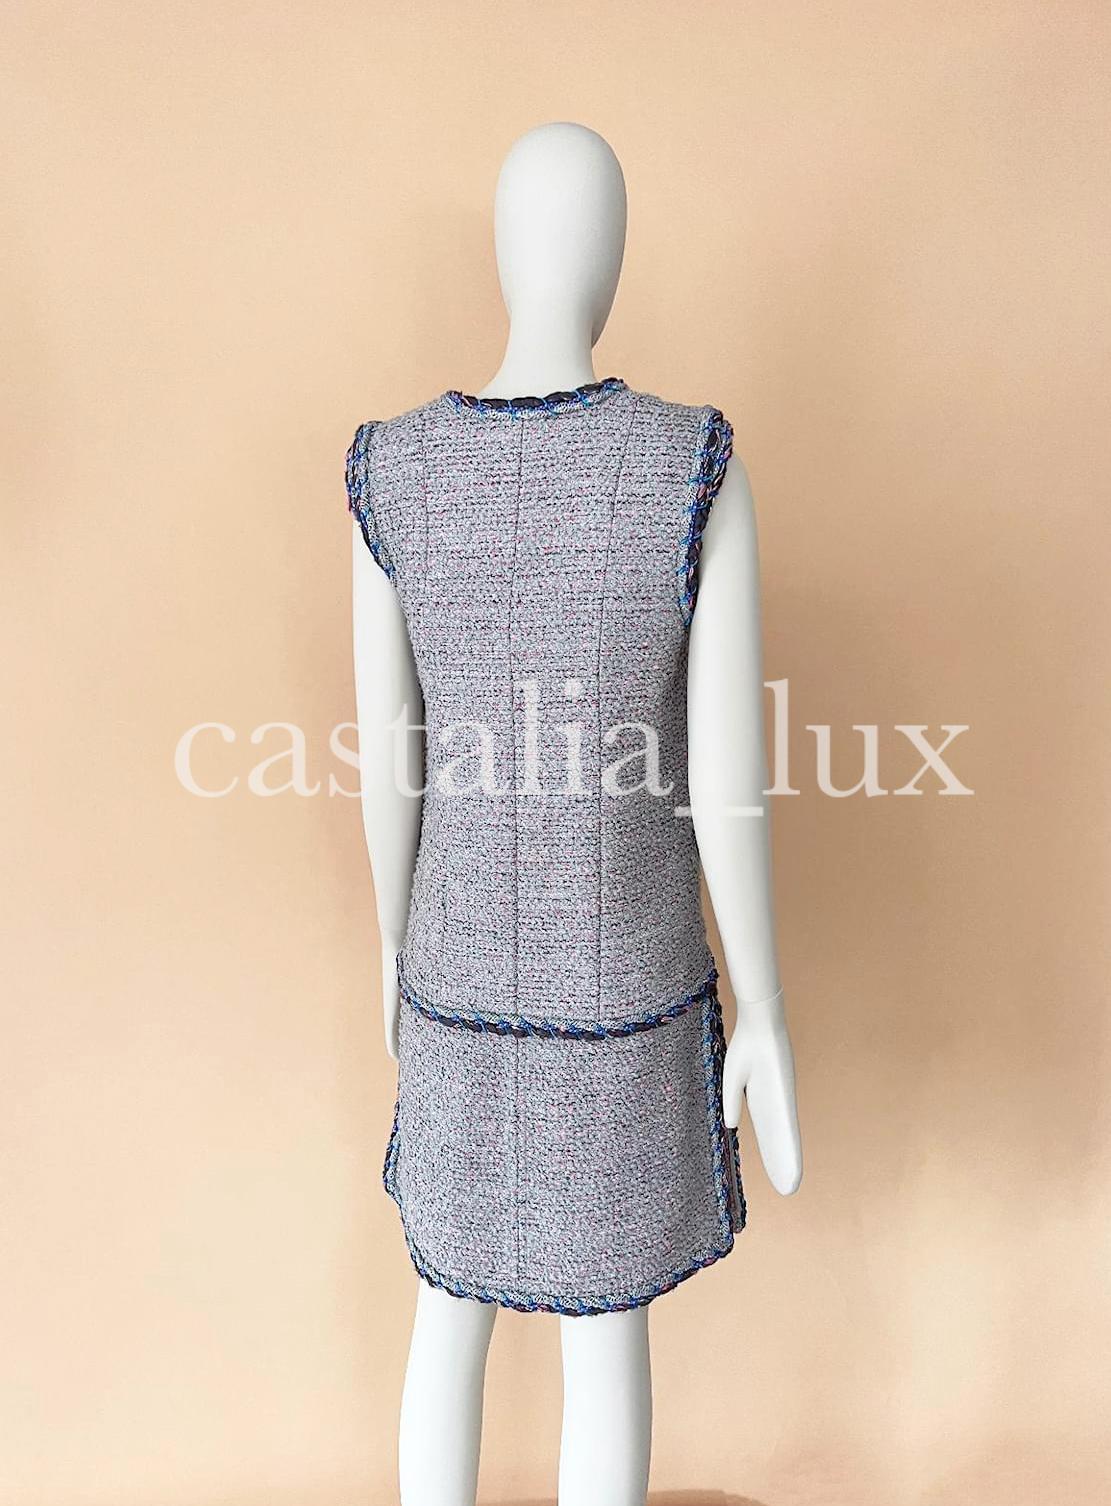 Chanel New Icon Cara Delevingne Runway Tweed Dress 10